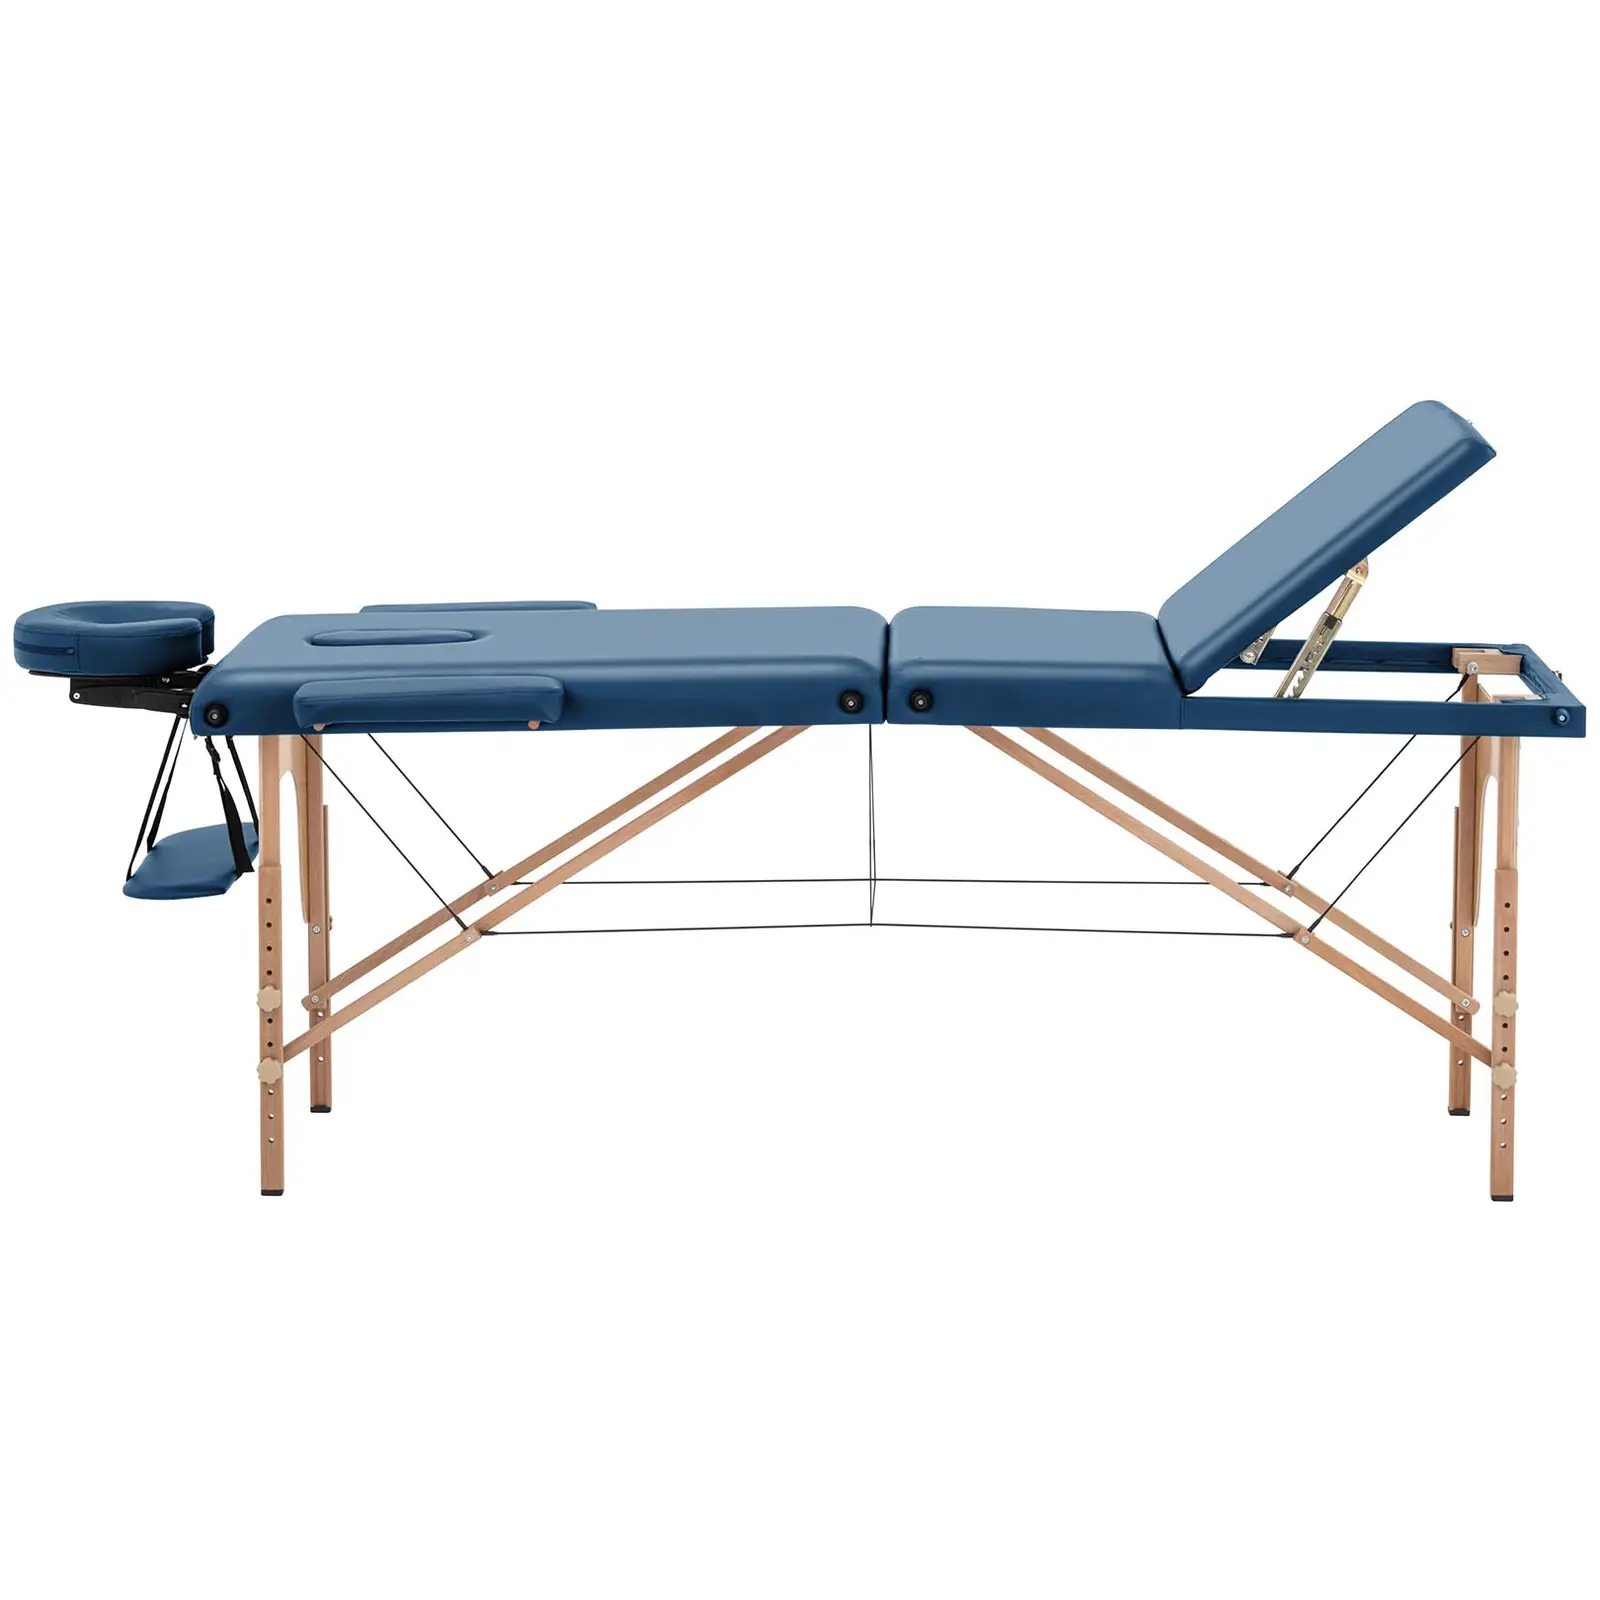 Hopfällbar massagebänk - 185 x 60 x 60-85 cm - 227 kg - Blå